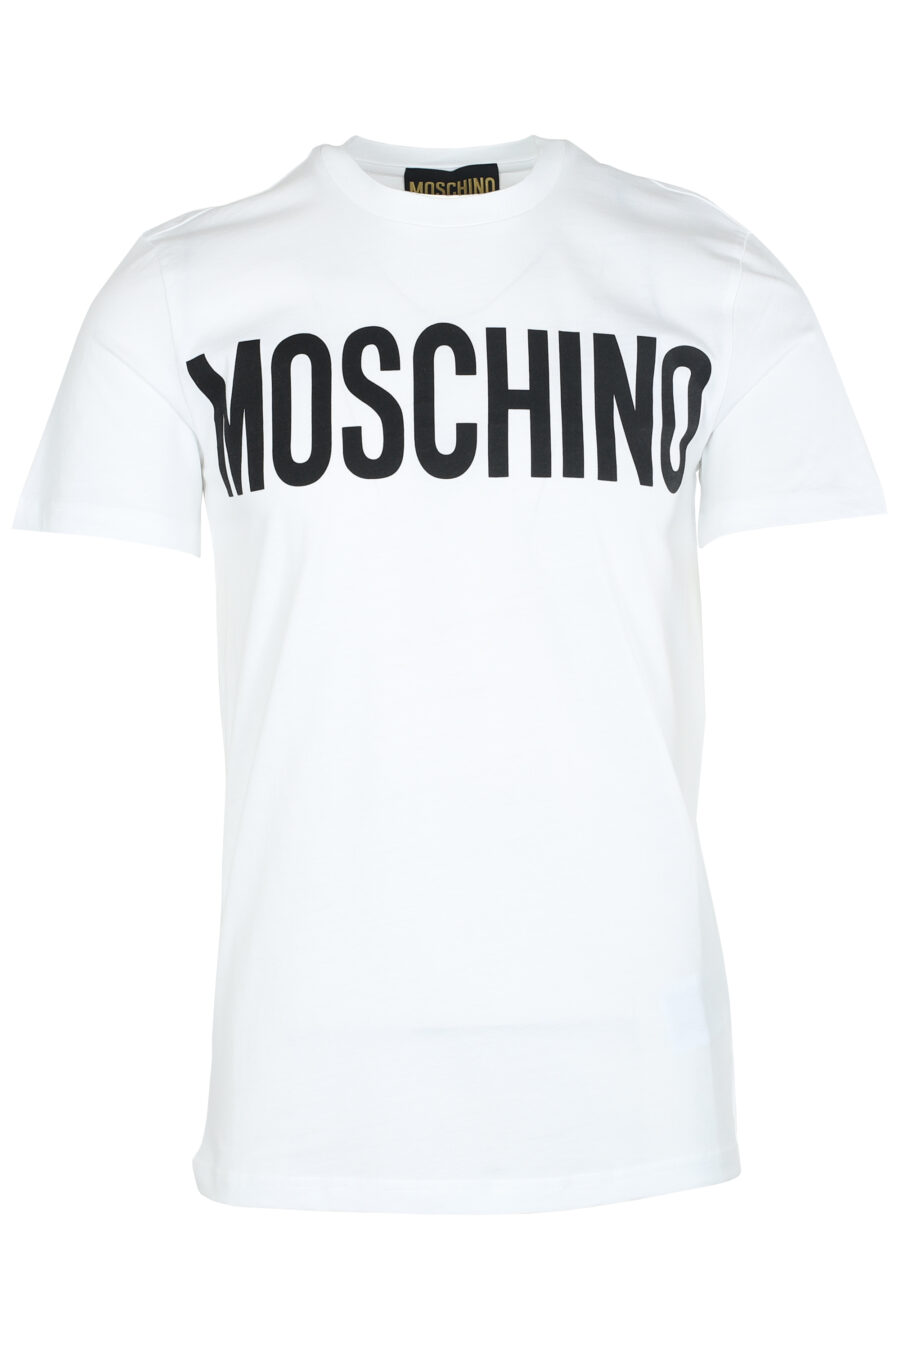 Camiseta blanca con maxilogo negro - IMG 6172